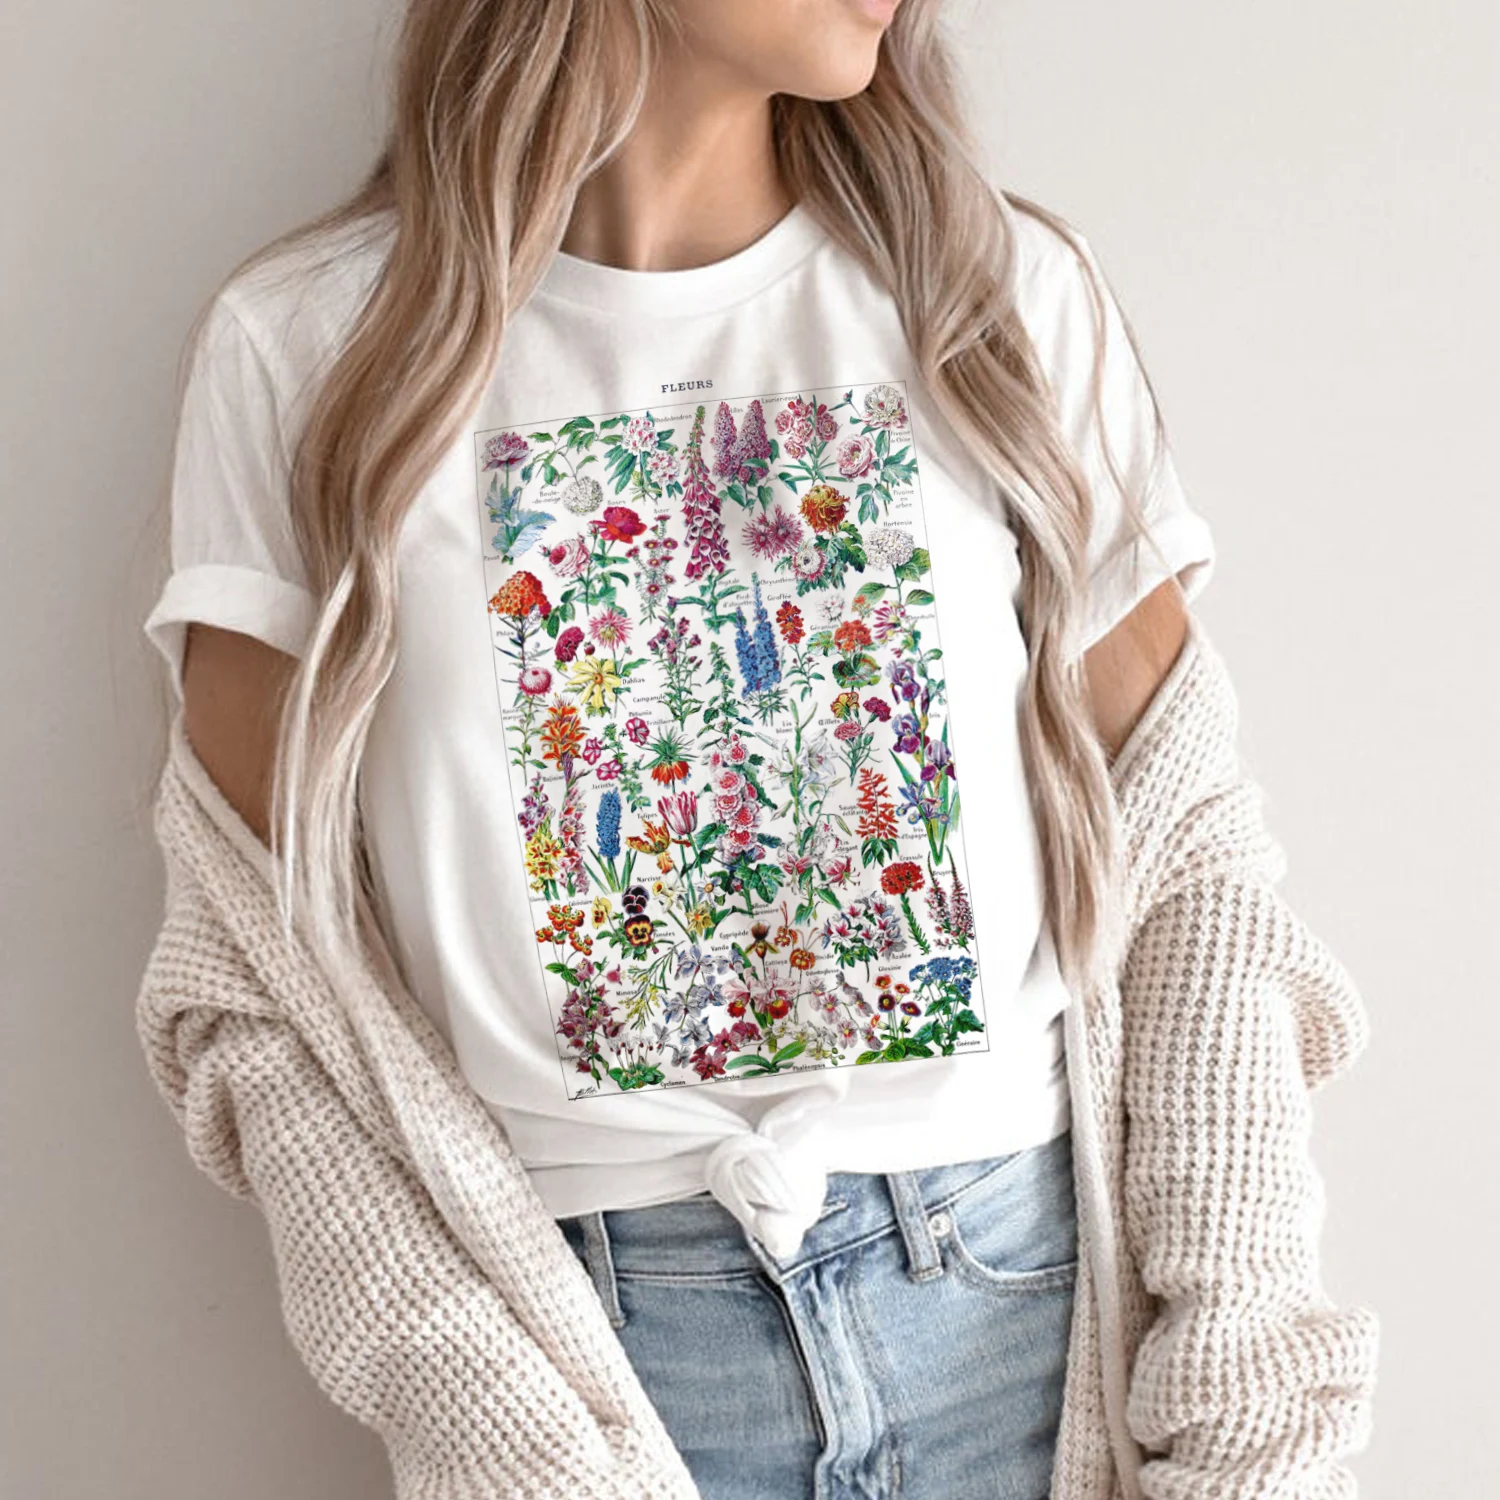 Fashion Shirts T-Shirts Desigual T-Shirt flower pattern casual look 